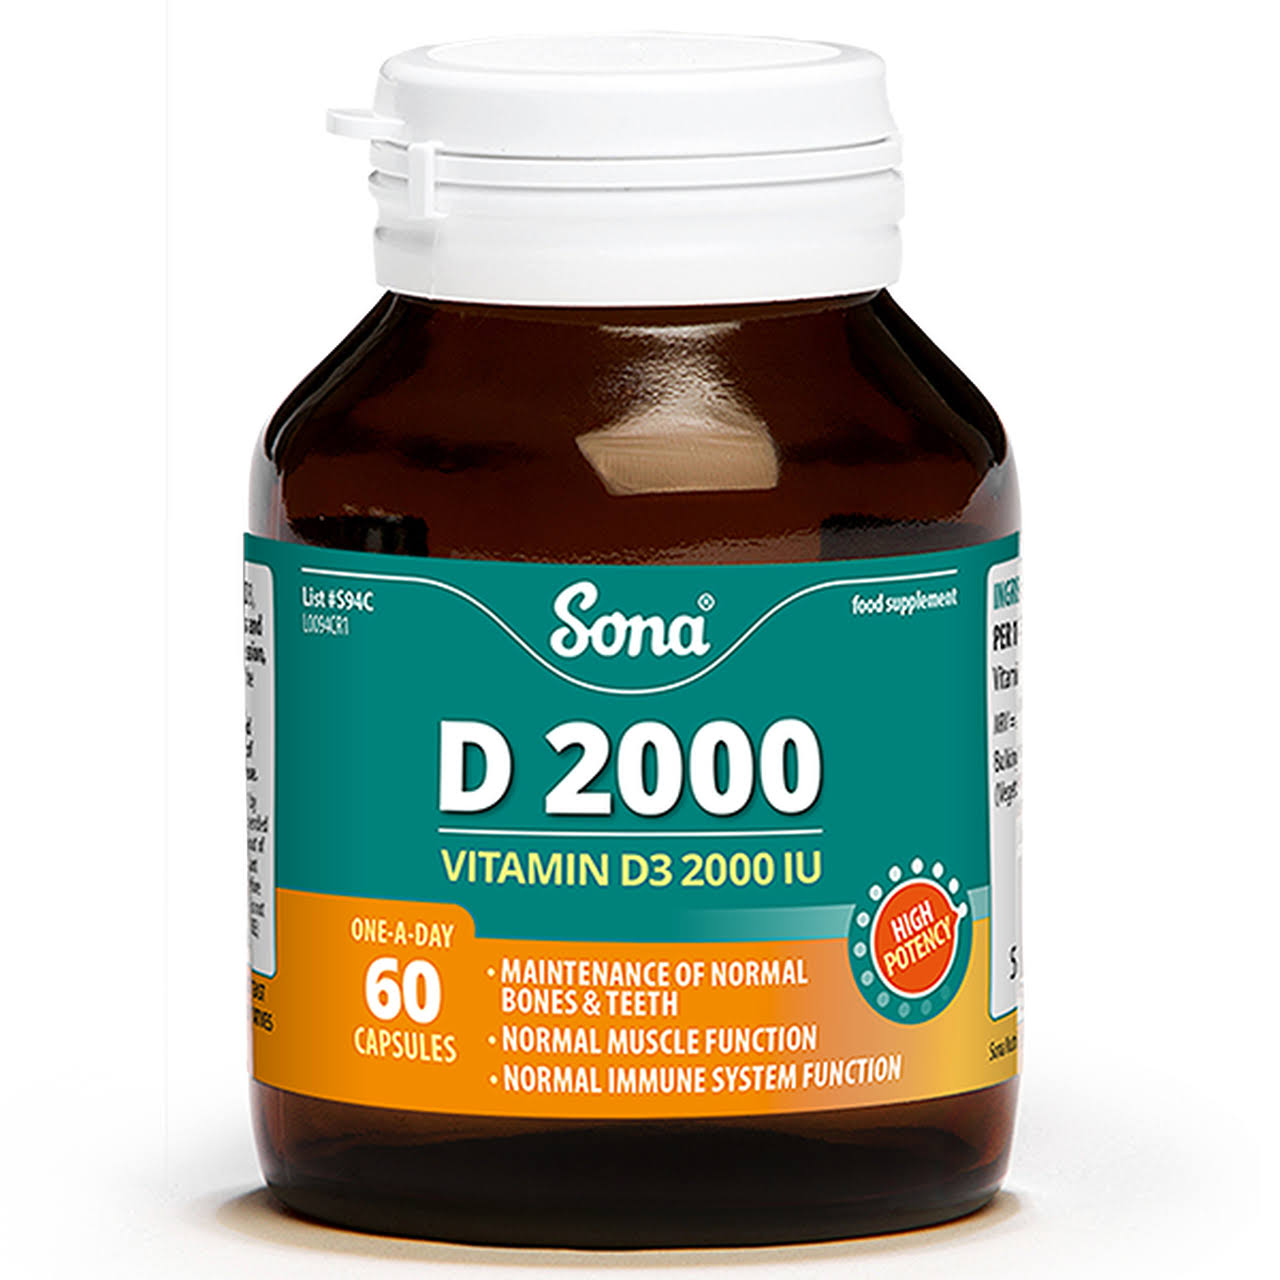 Sona Vitamin D 2000 60 Capsules